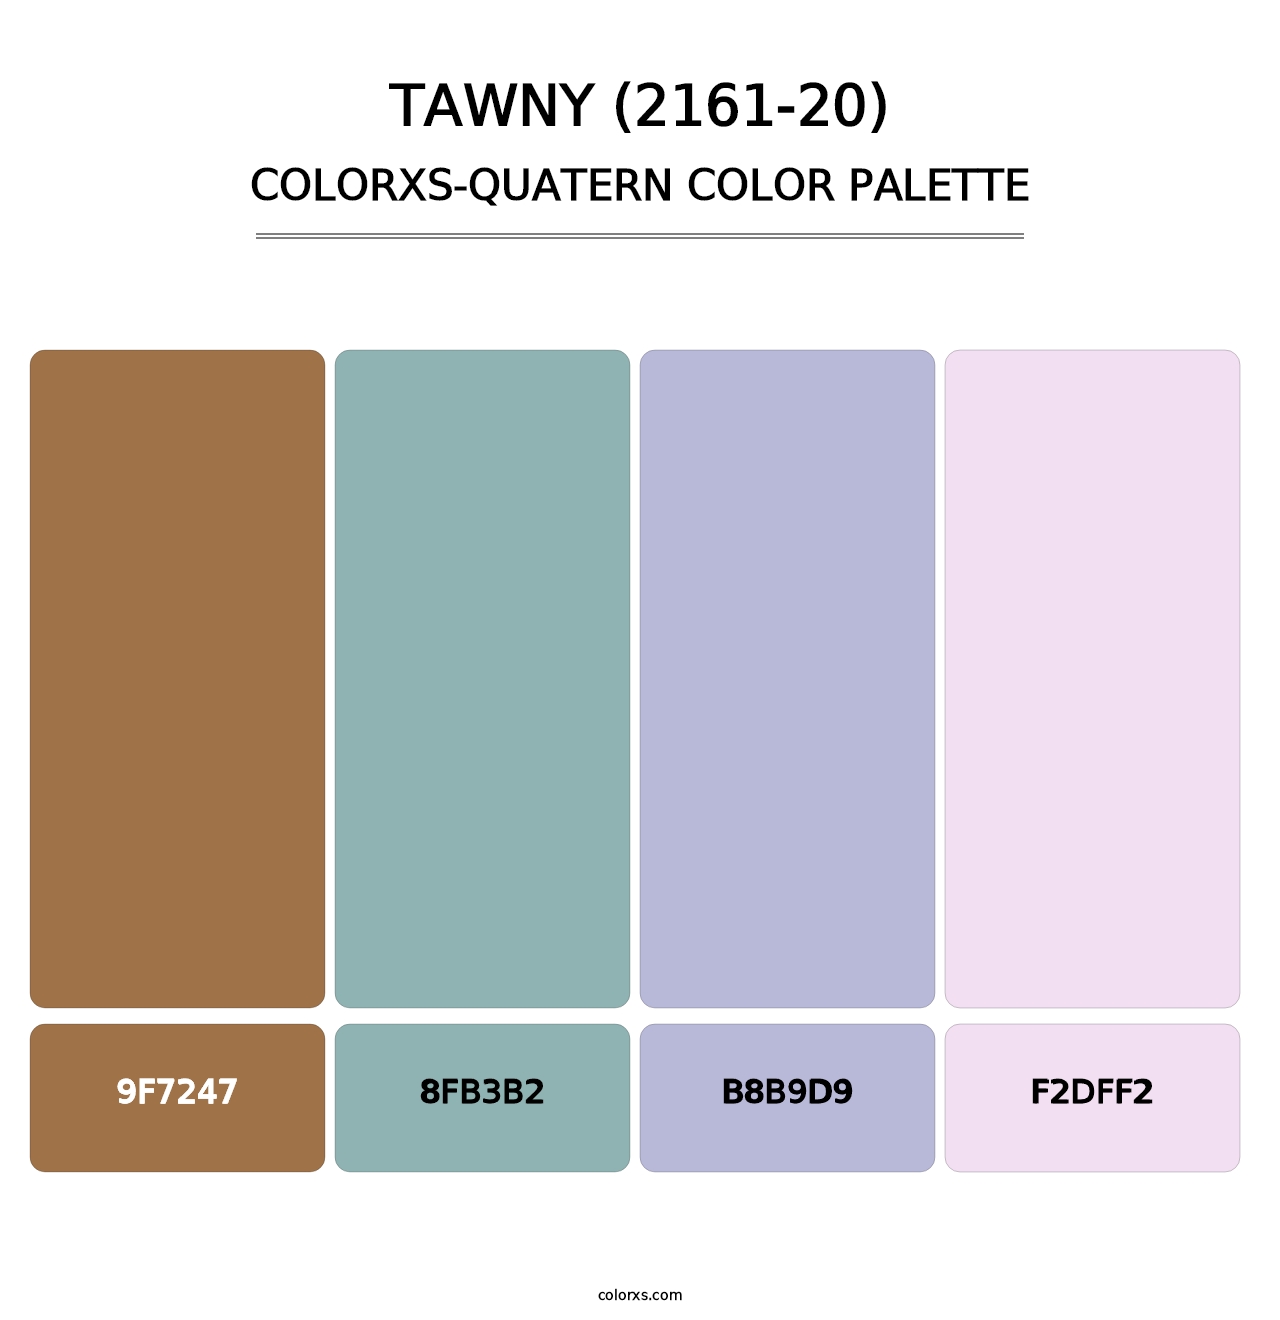 Tawny (2161-20) - Colorxs Quatern Palette